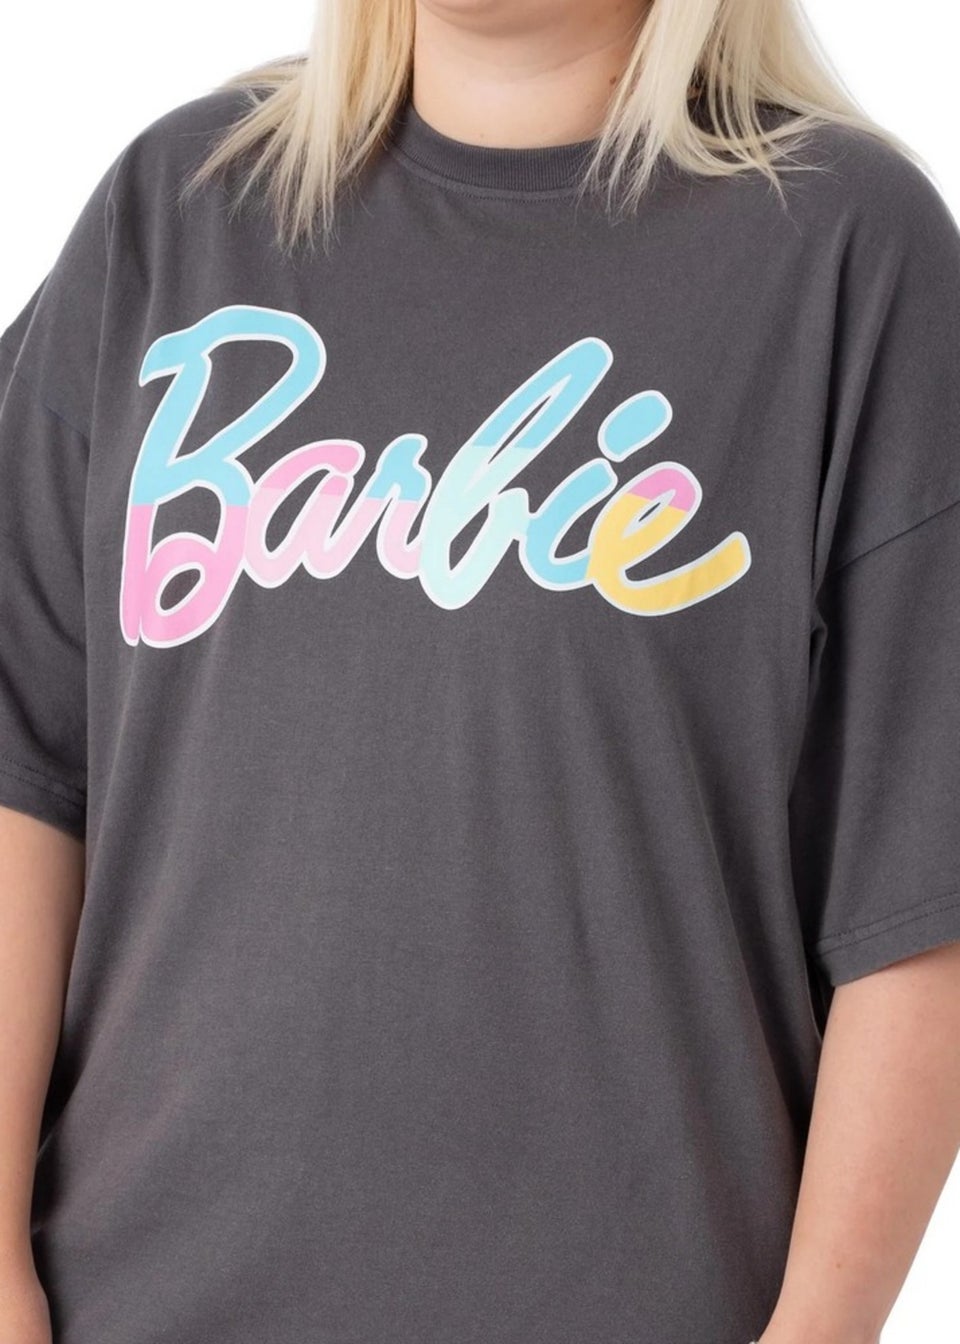 Barbie Grey Oversized T-Shirt Dress